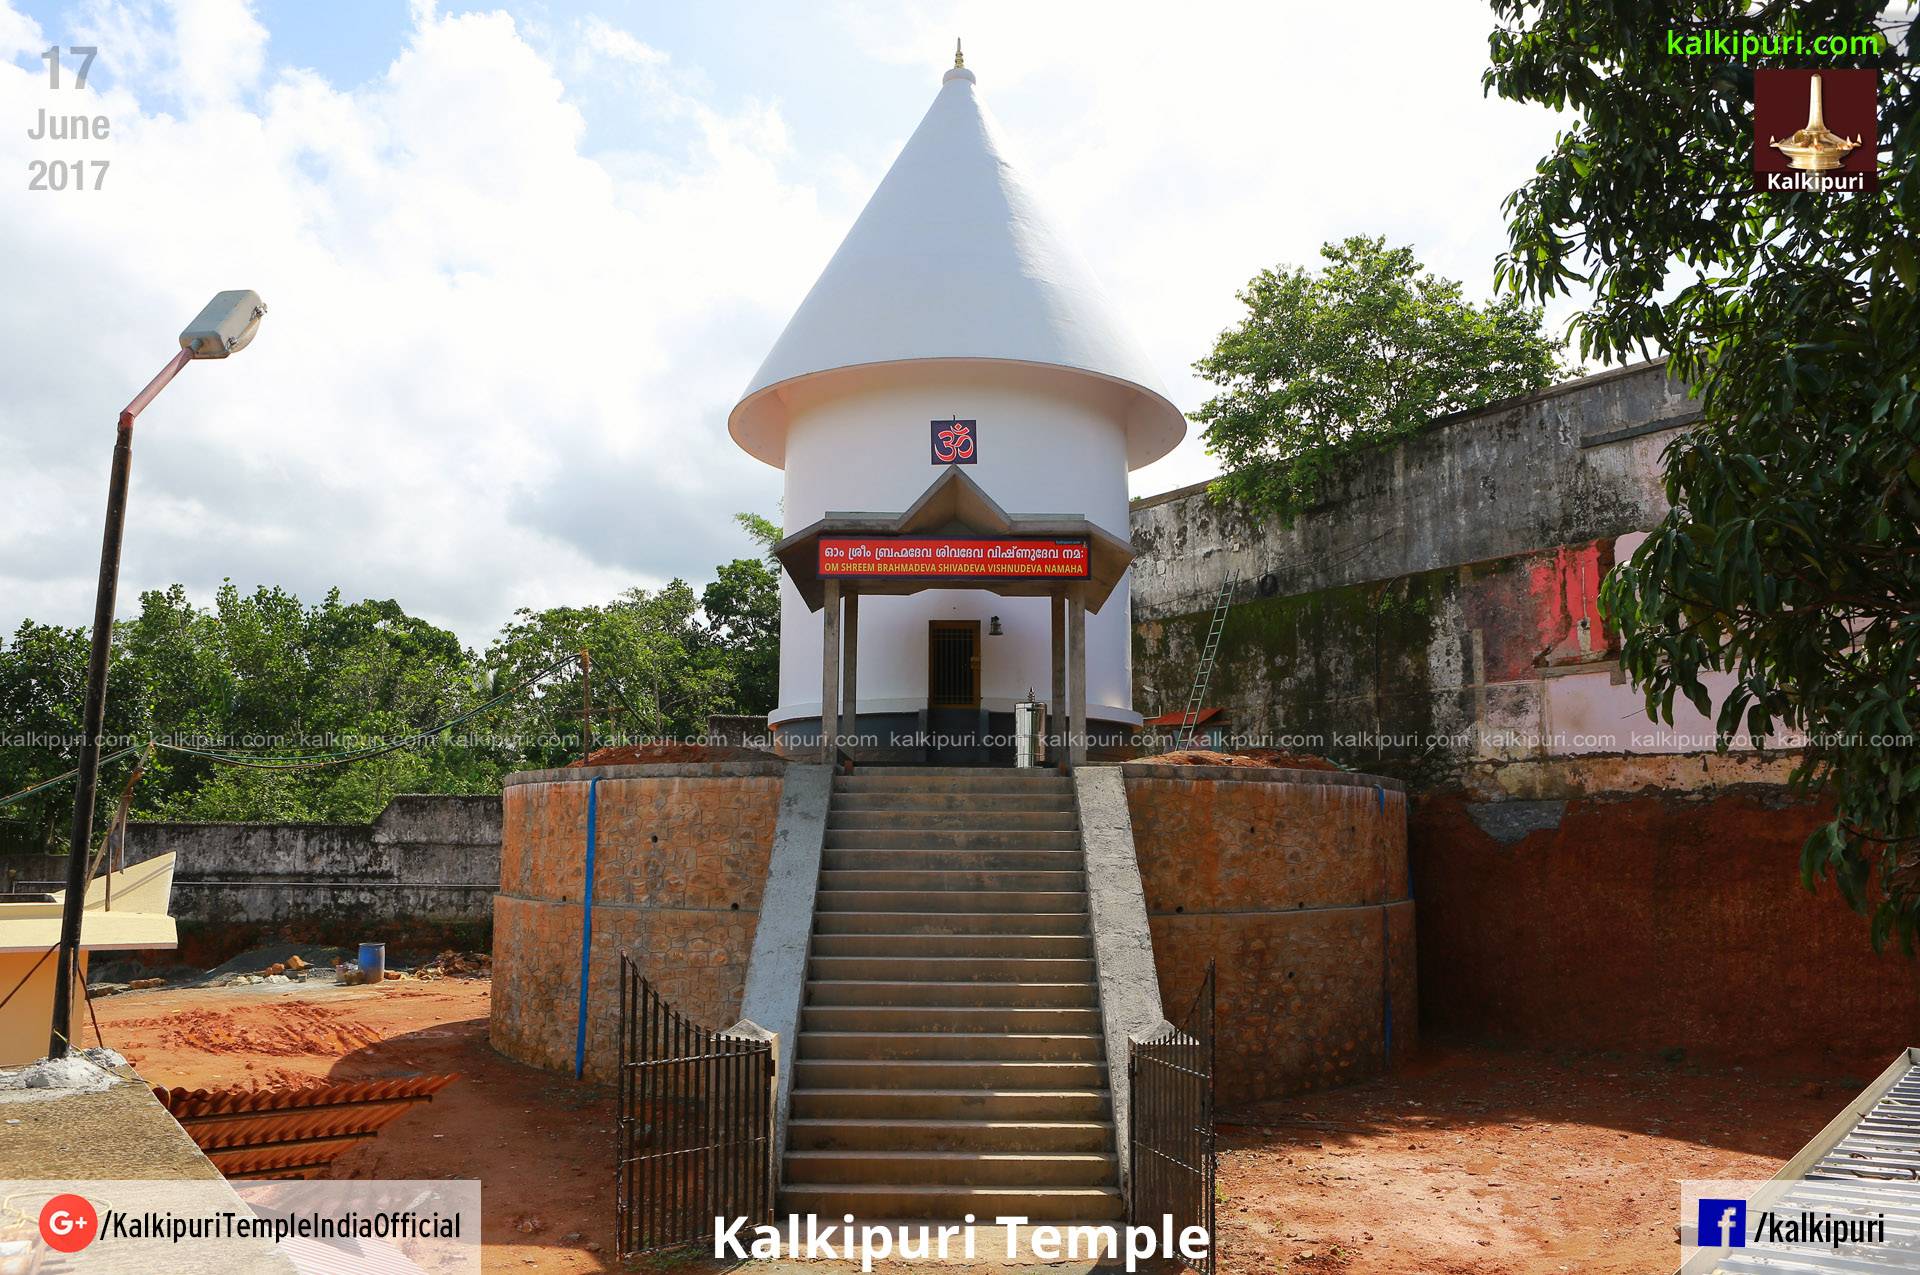 Kalkipuri Mantra: Om Shreem BrahmaDeva ShivaDeva VishnuDeva Namaha. Kalki is the 10th incarnation of Lord Vishnu and founder of Kalkipuri estd. in 2001 at His birth place.